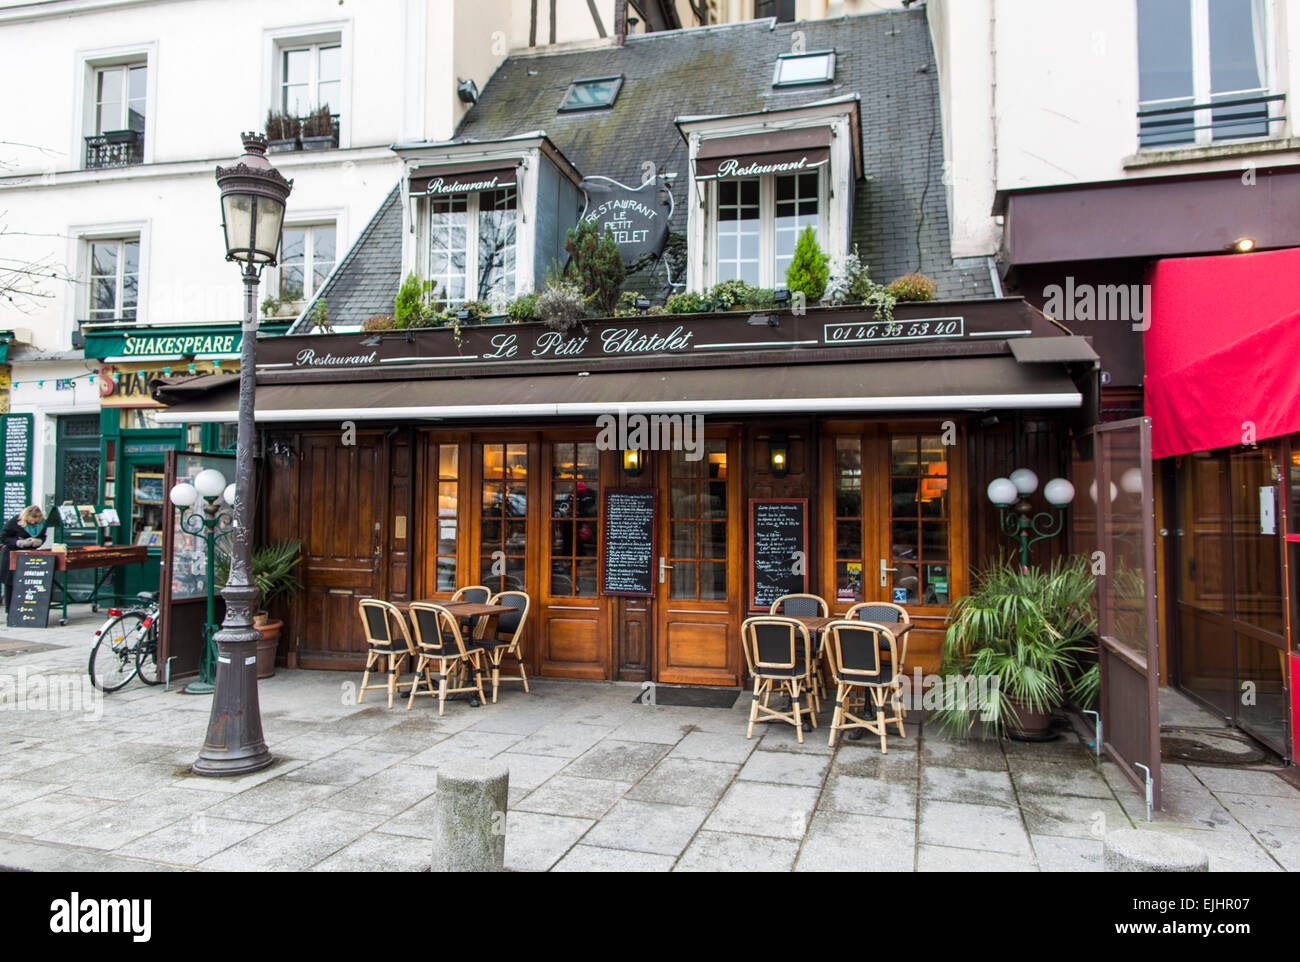 Outdoor cafe restaurant Le Petit Chatelet in Paris, France Stock Photo ...